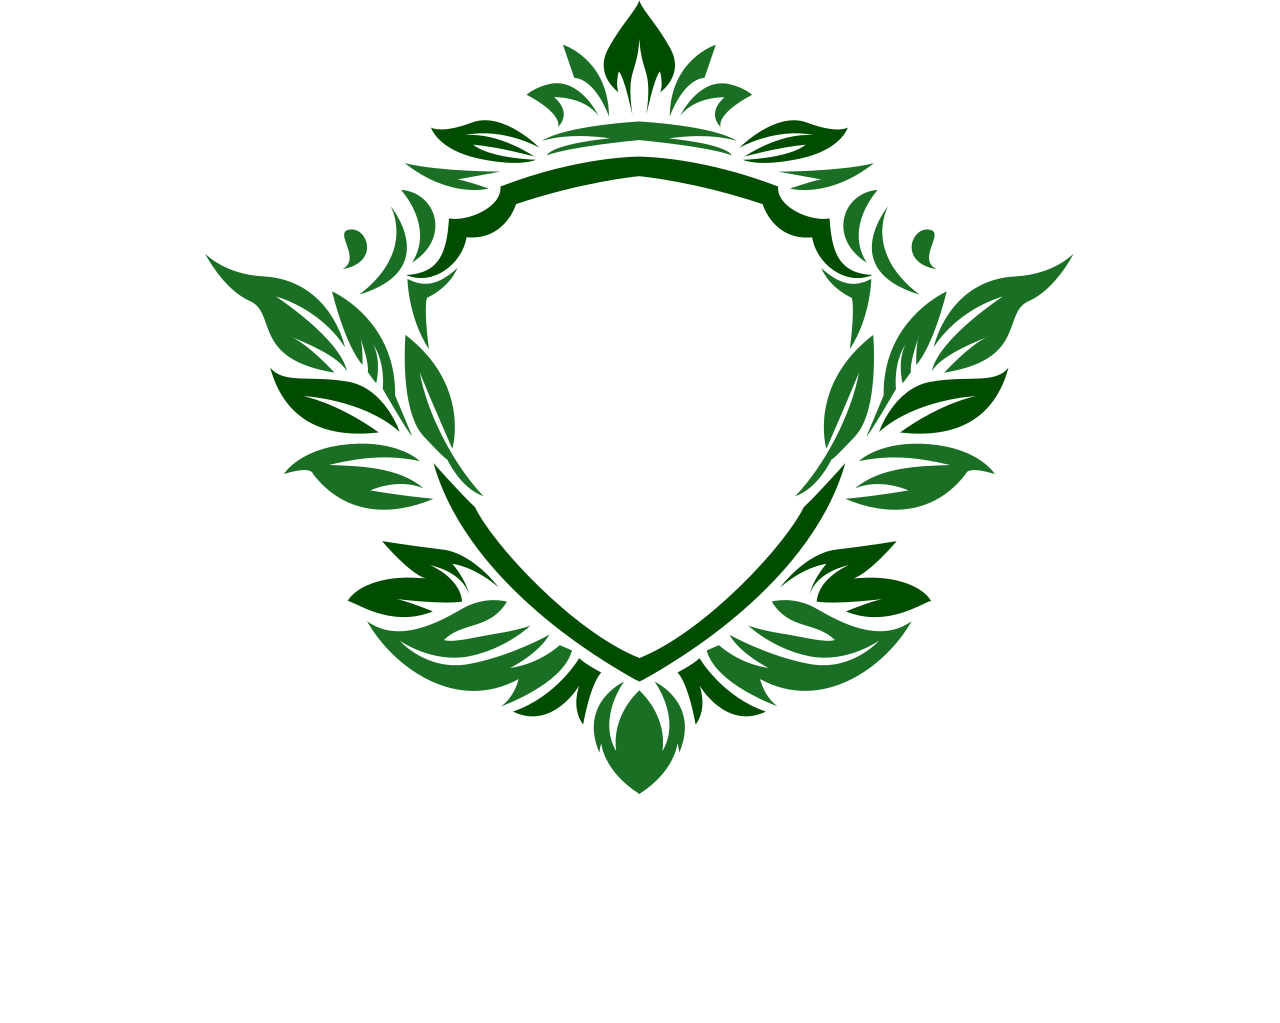 Maragone's logo